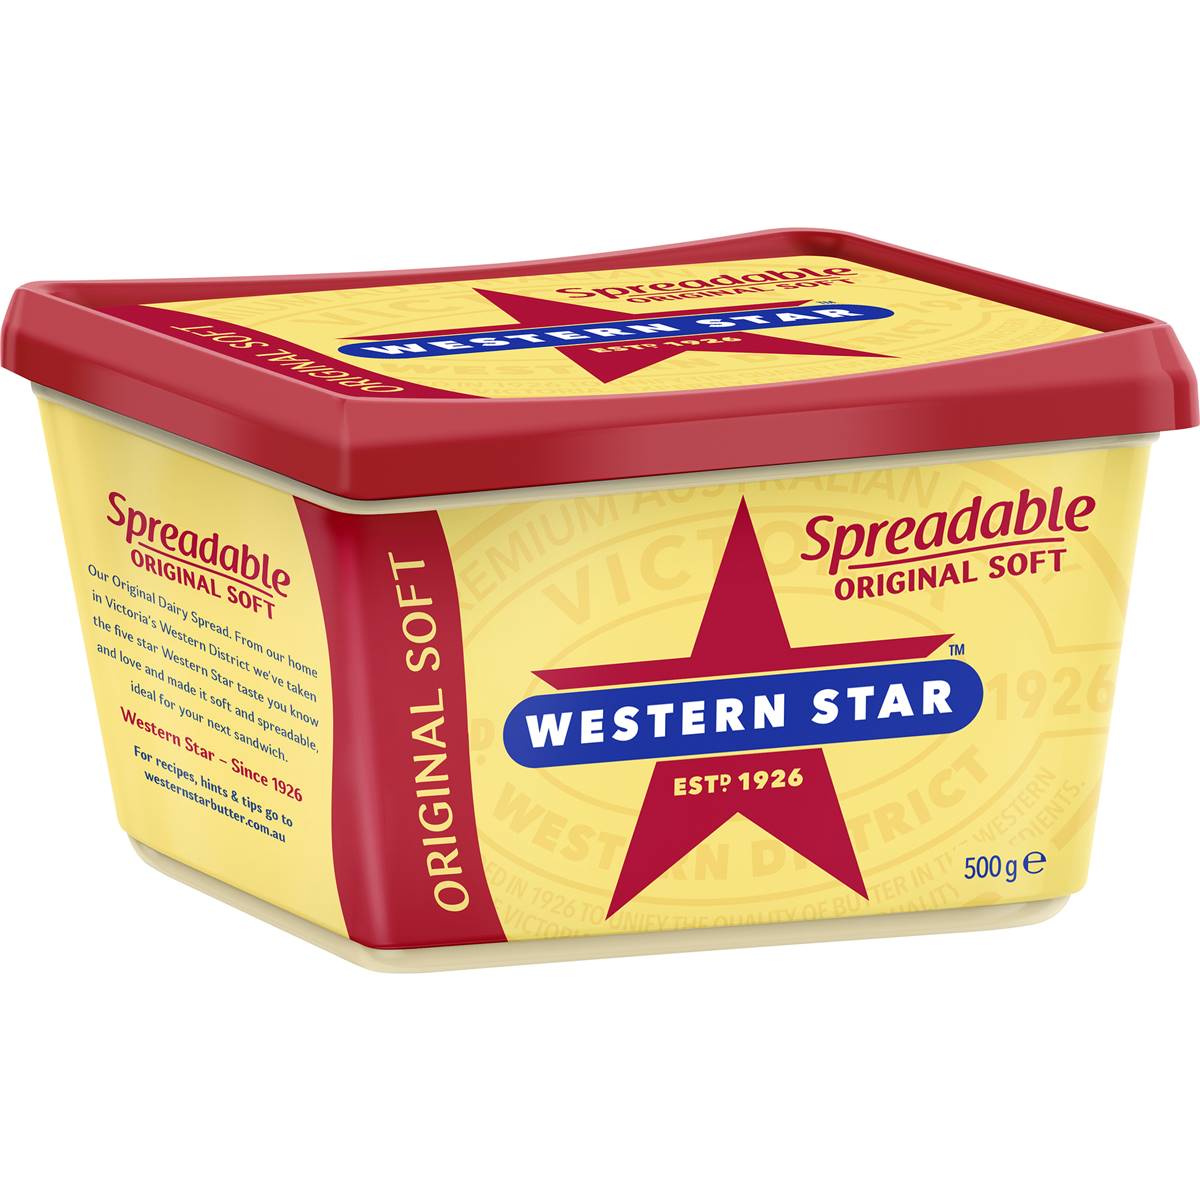 Calories in Western Star Original Spreadable